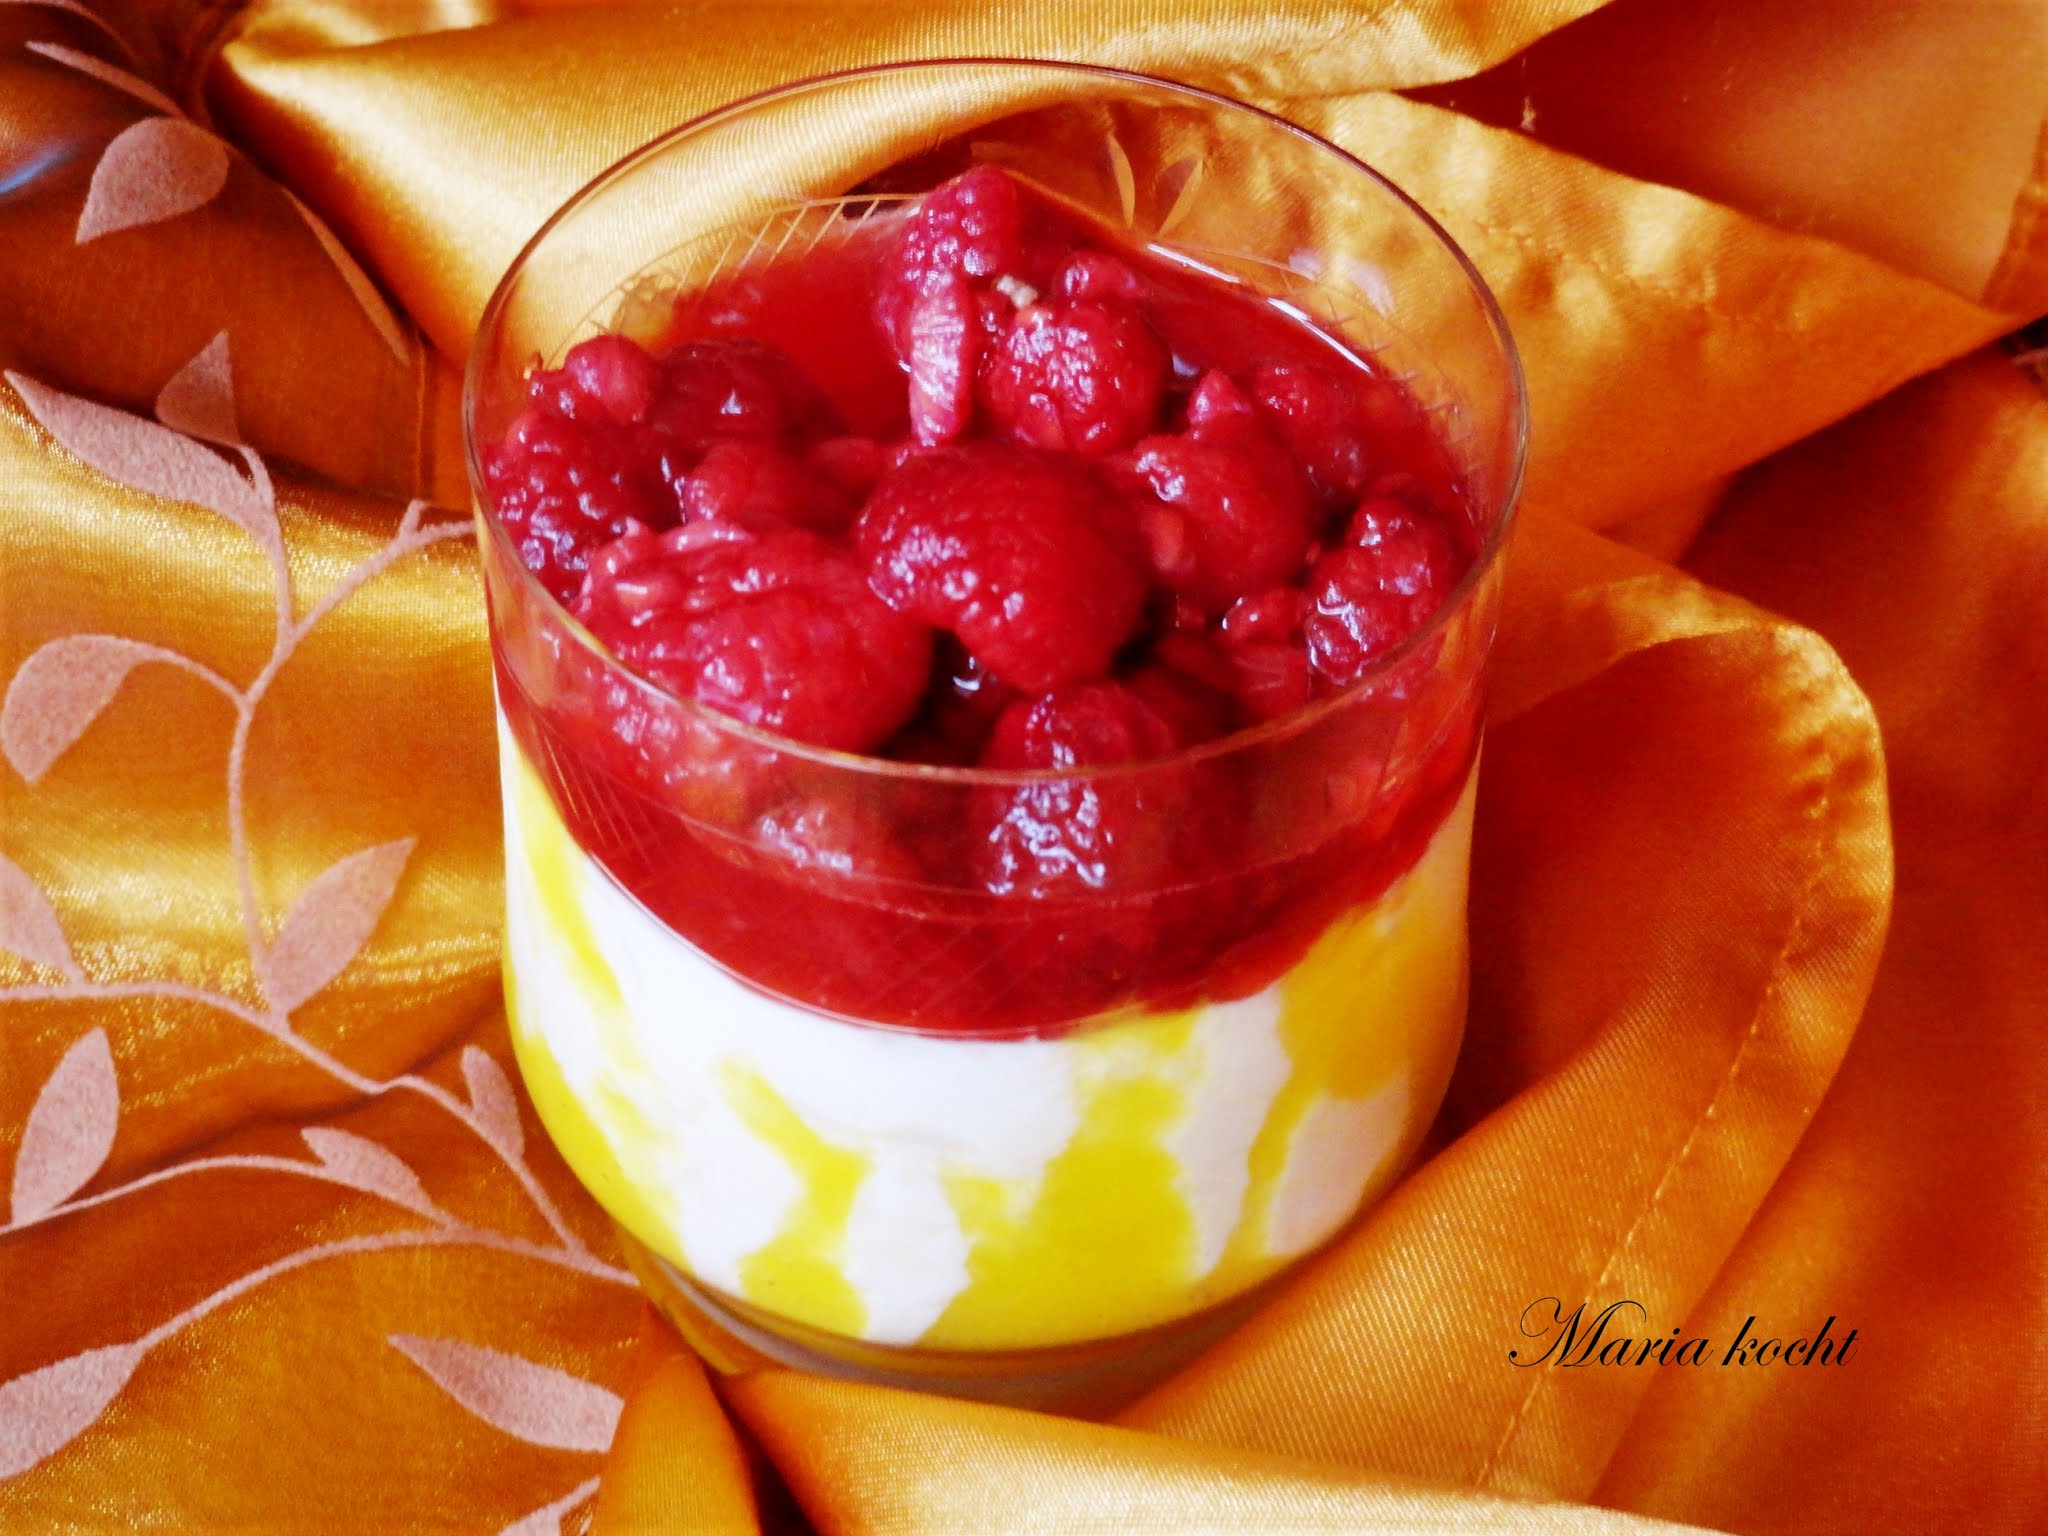 Maria kocht: Aprikosen-Joghurt-Mousse mit Himbeeren / Barackos joghurt ...